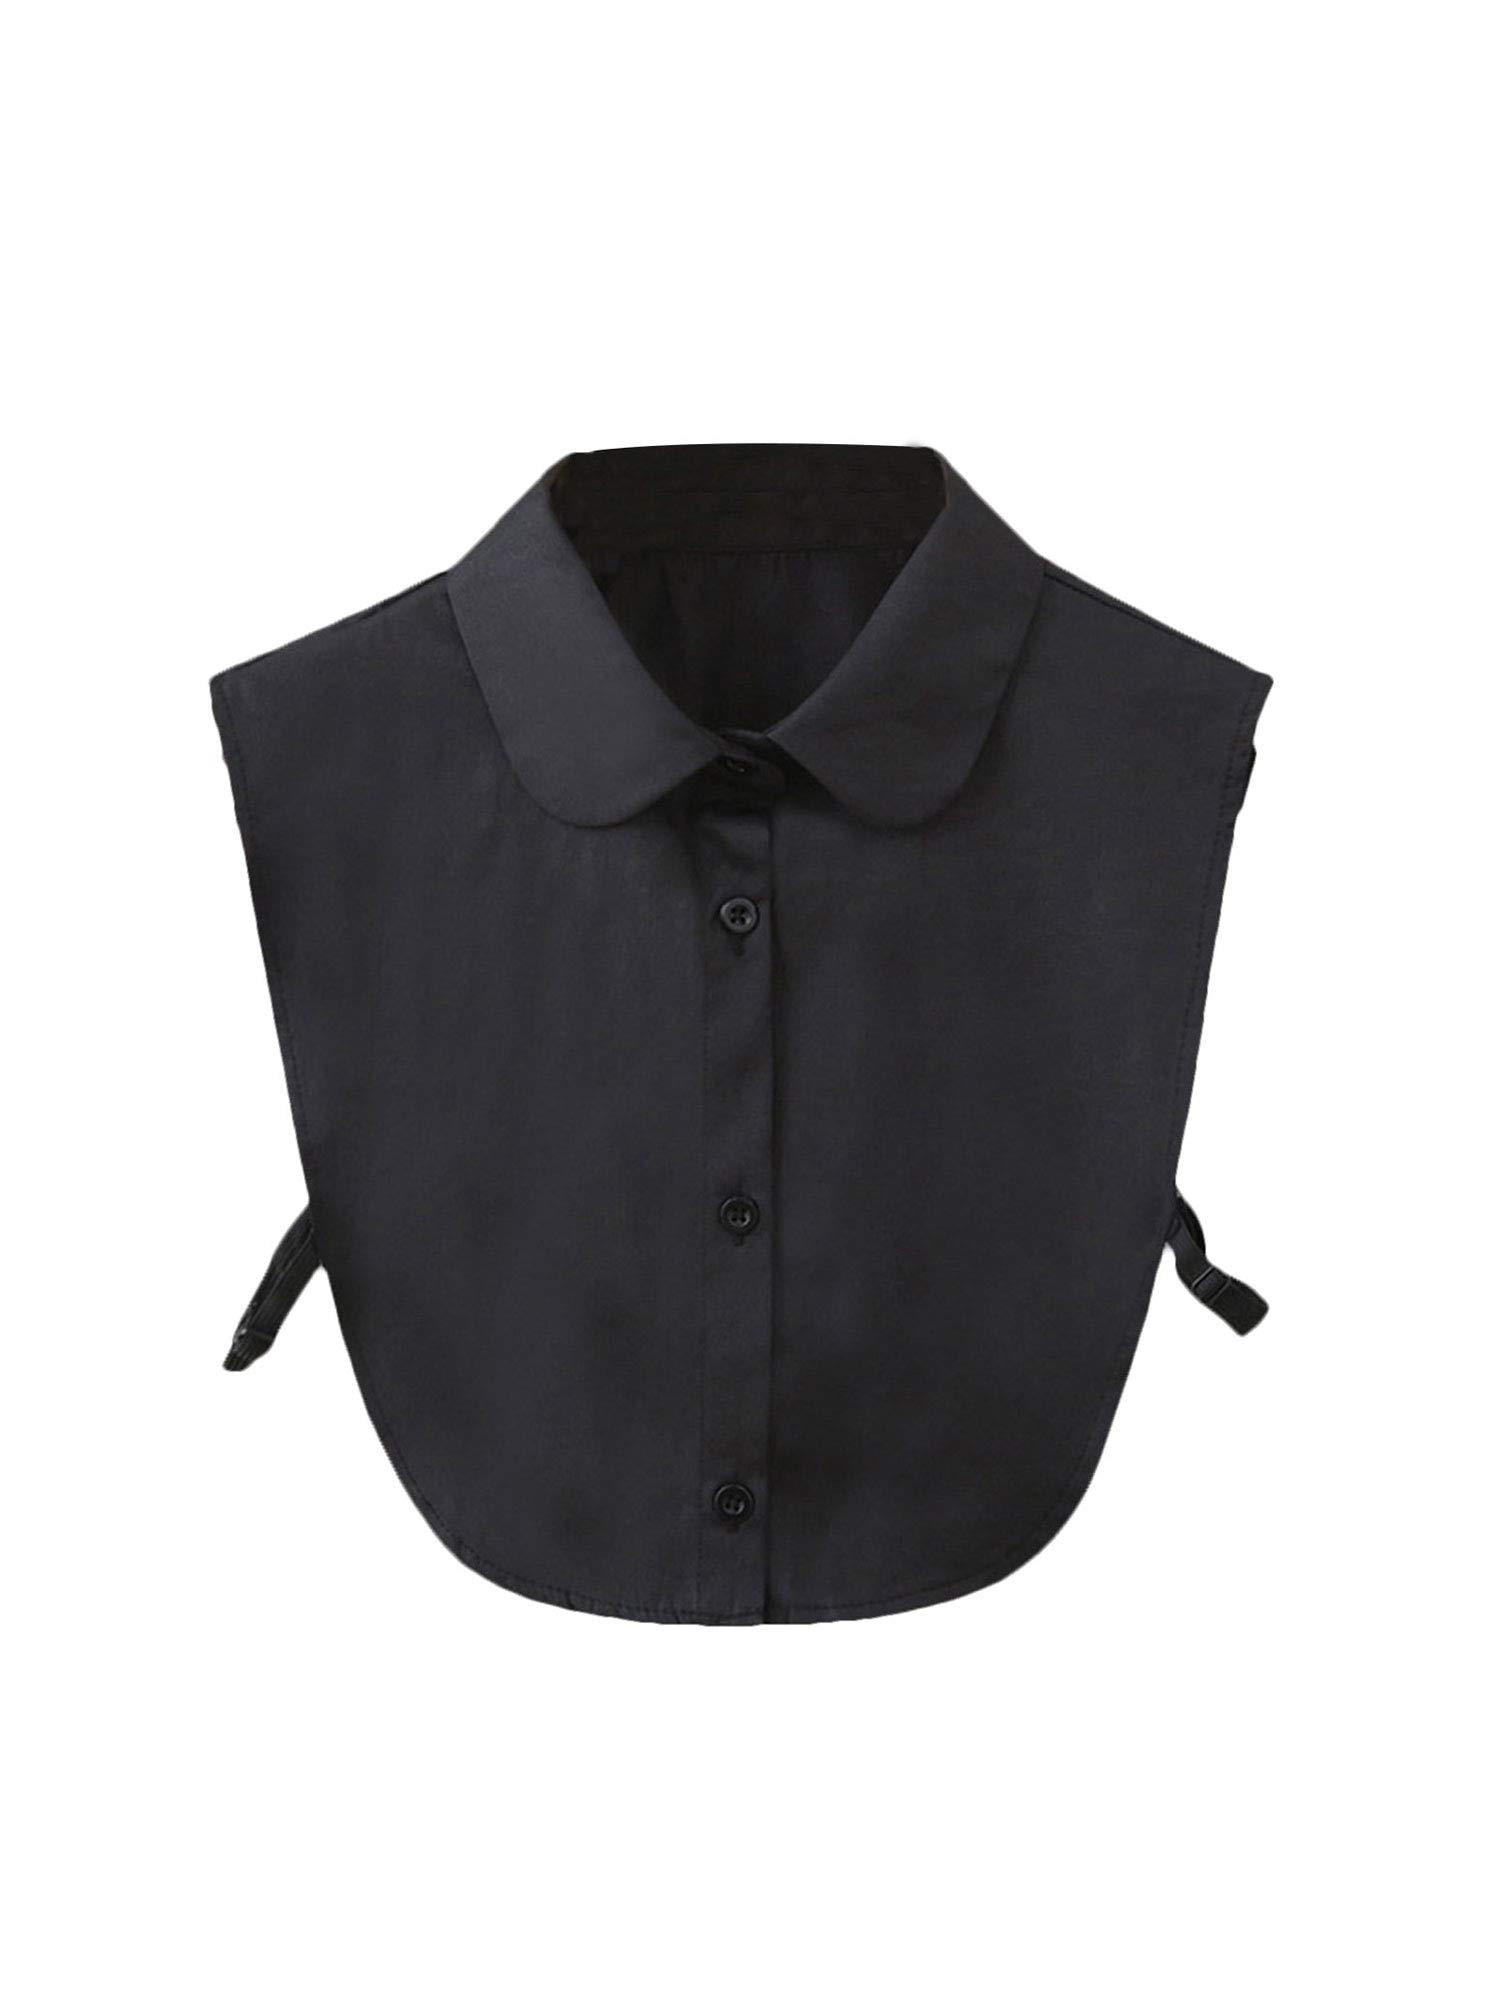 Fake Collar Detachable Dickey Collar Blouse Half Shirts Peter Pan Faux False Collar for Women & Girls Favors 